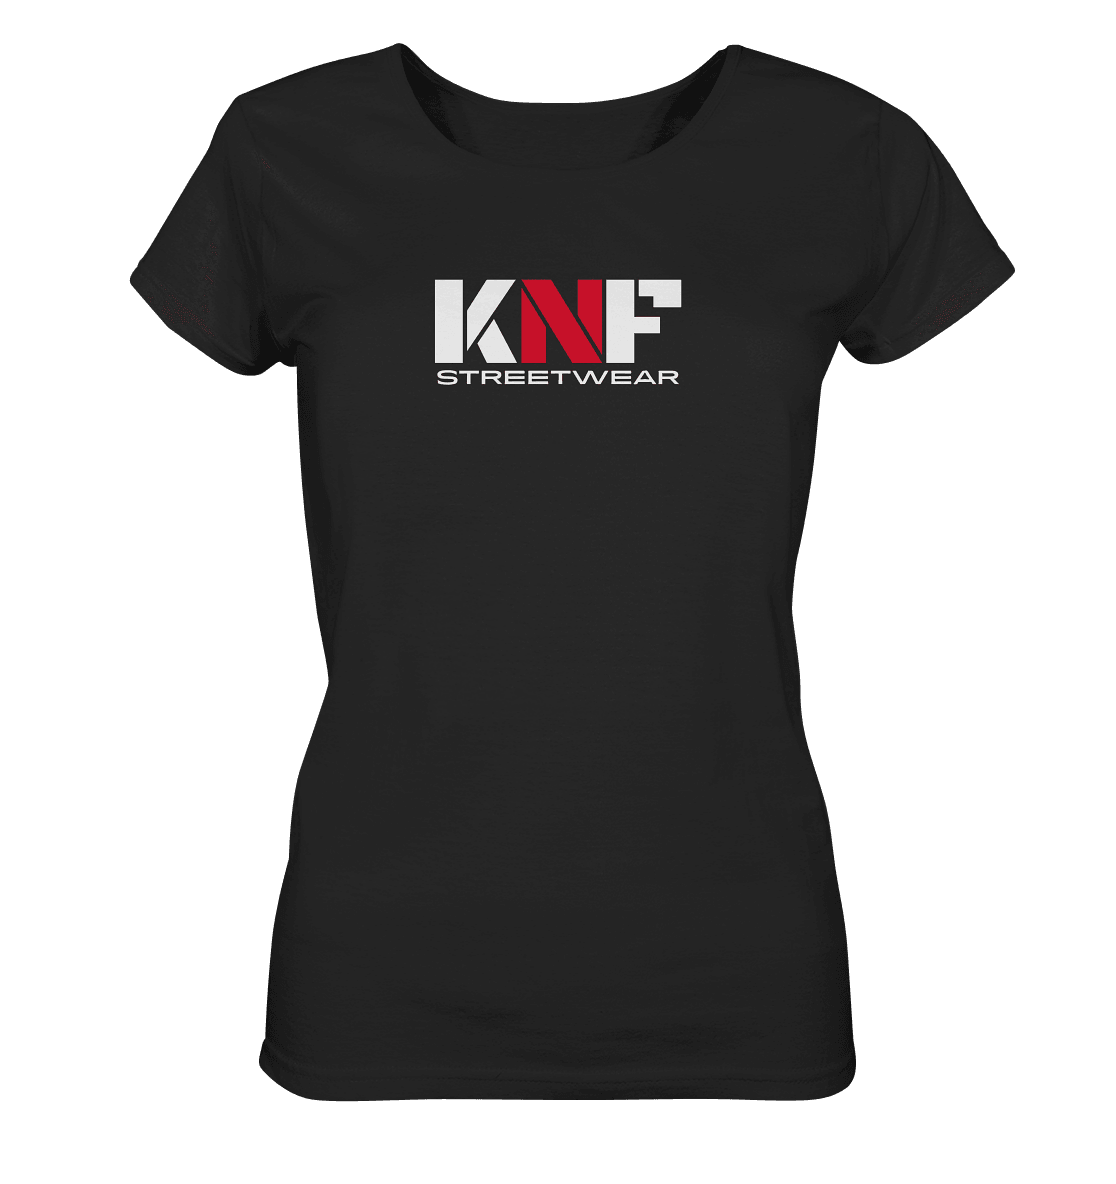 KNF "Claw marks" - Ladies Organic Shirt - Snapshirts